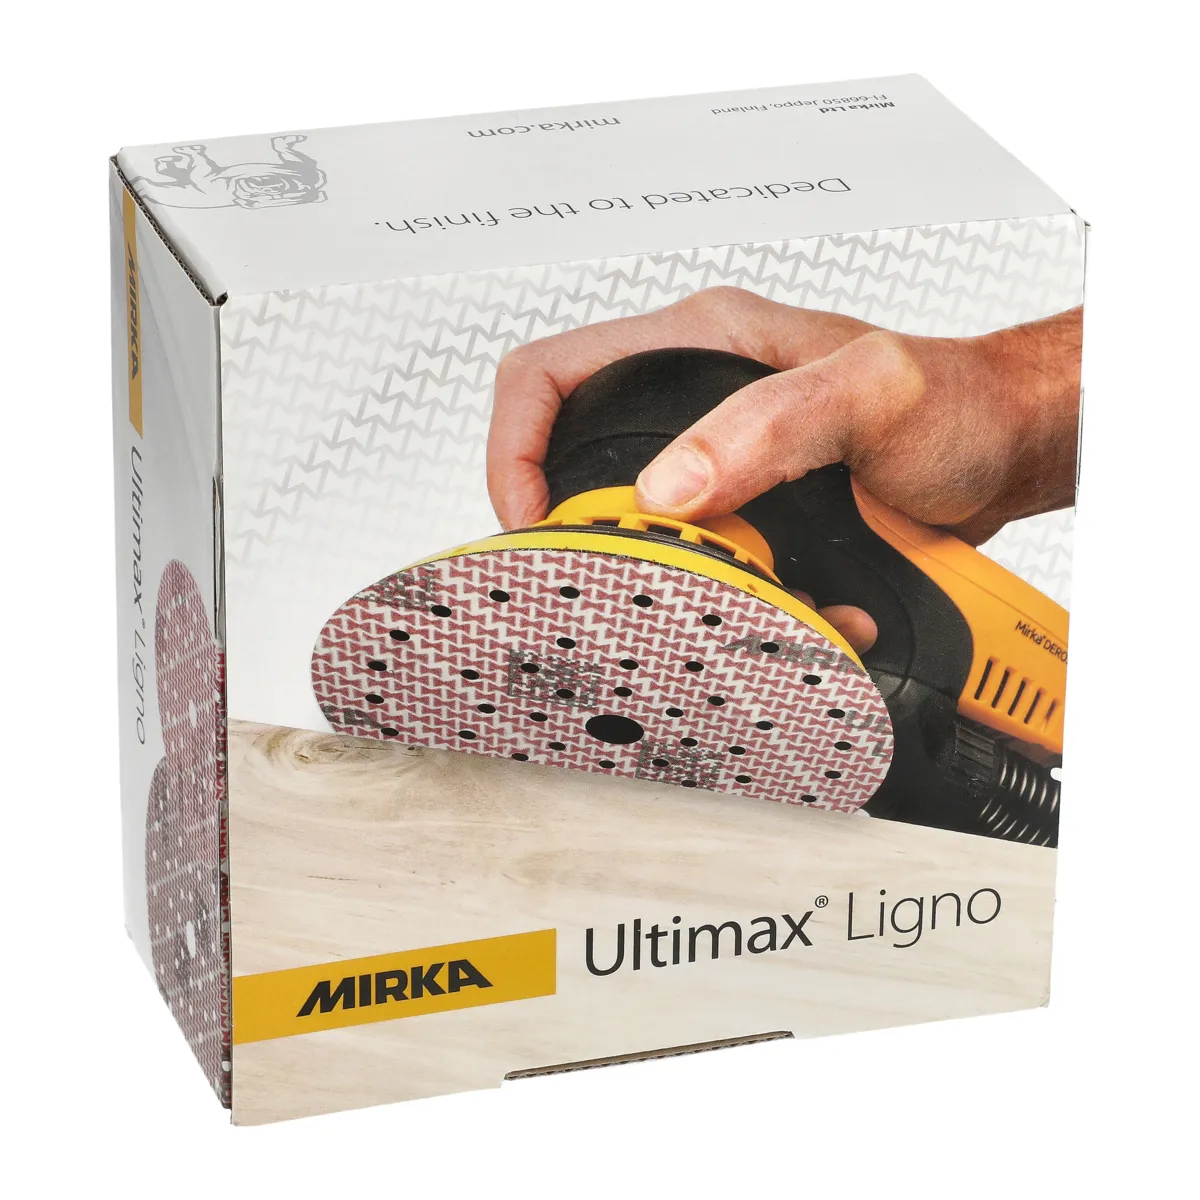 Abbildung Mirka Ultimax Ligno 150mm Multifit Verpackung.